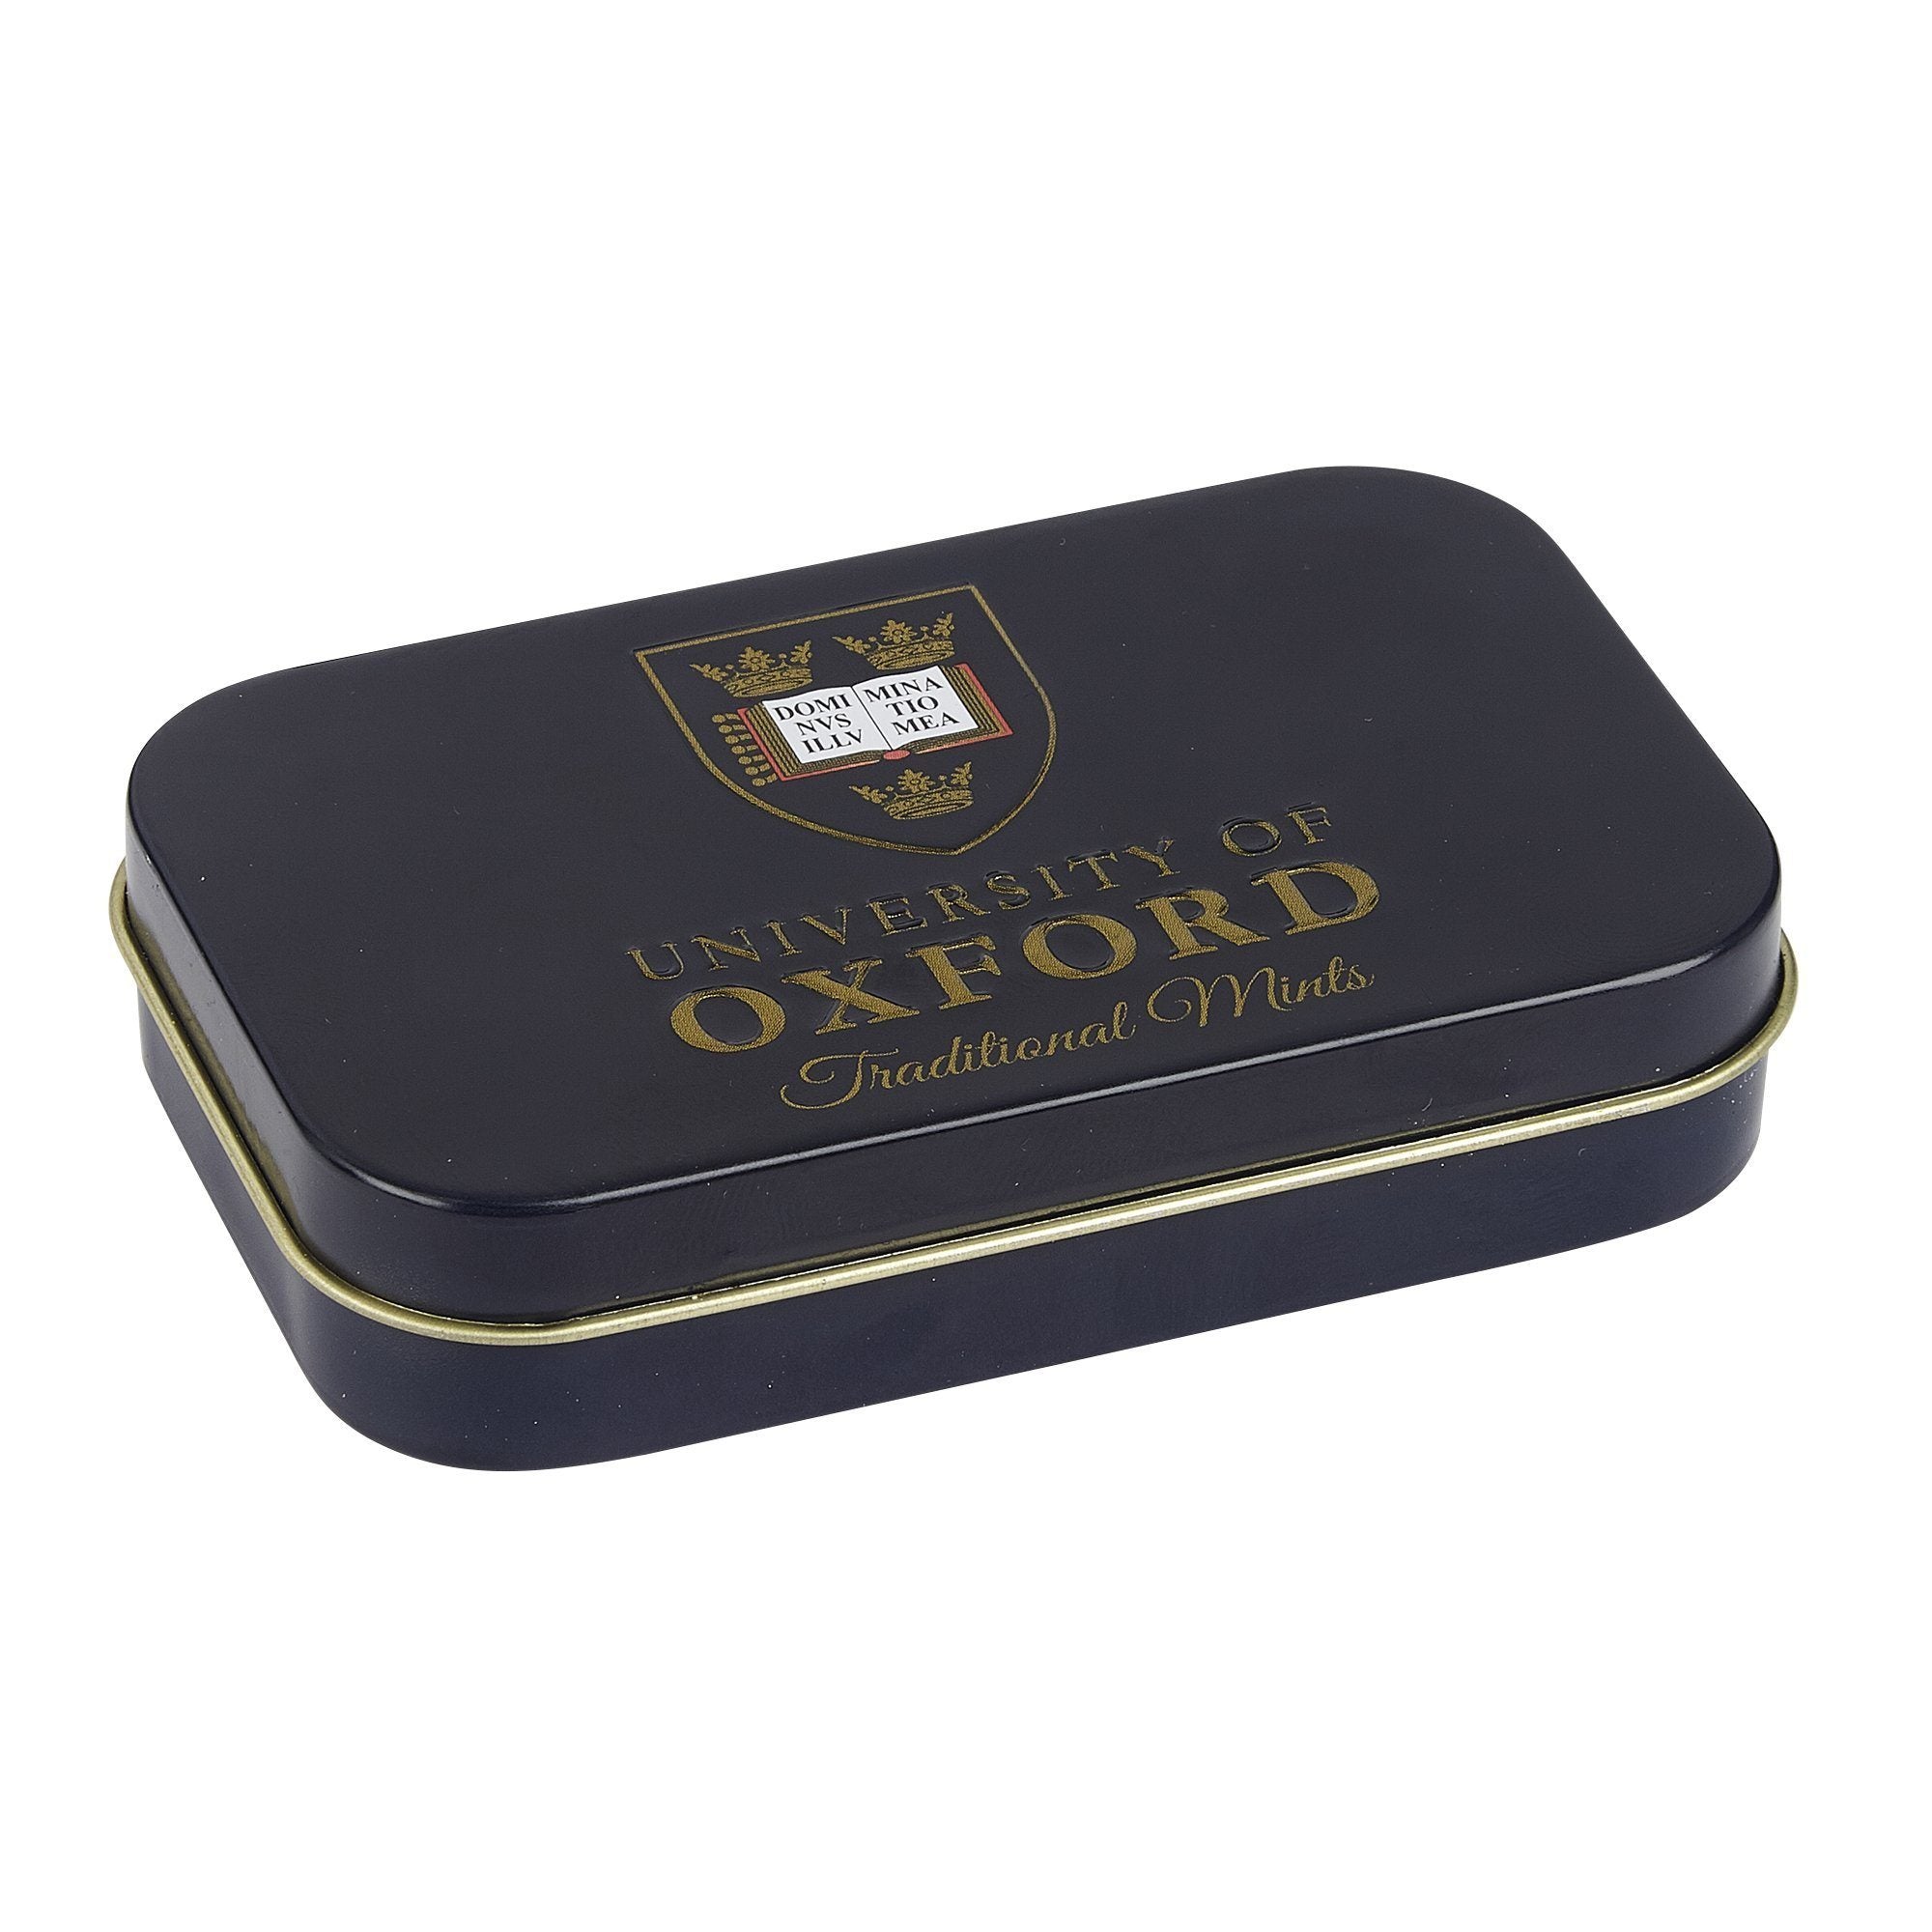 University of Oxford Sugar Free Mints Pocket Tin 35g Mints New English Teas 